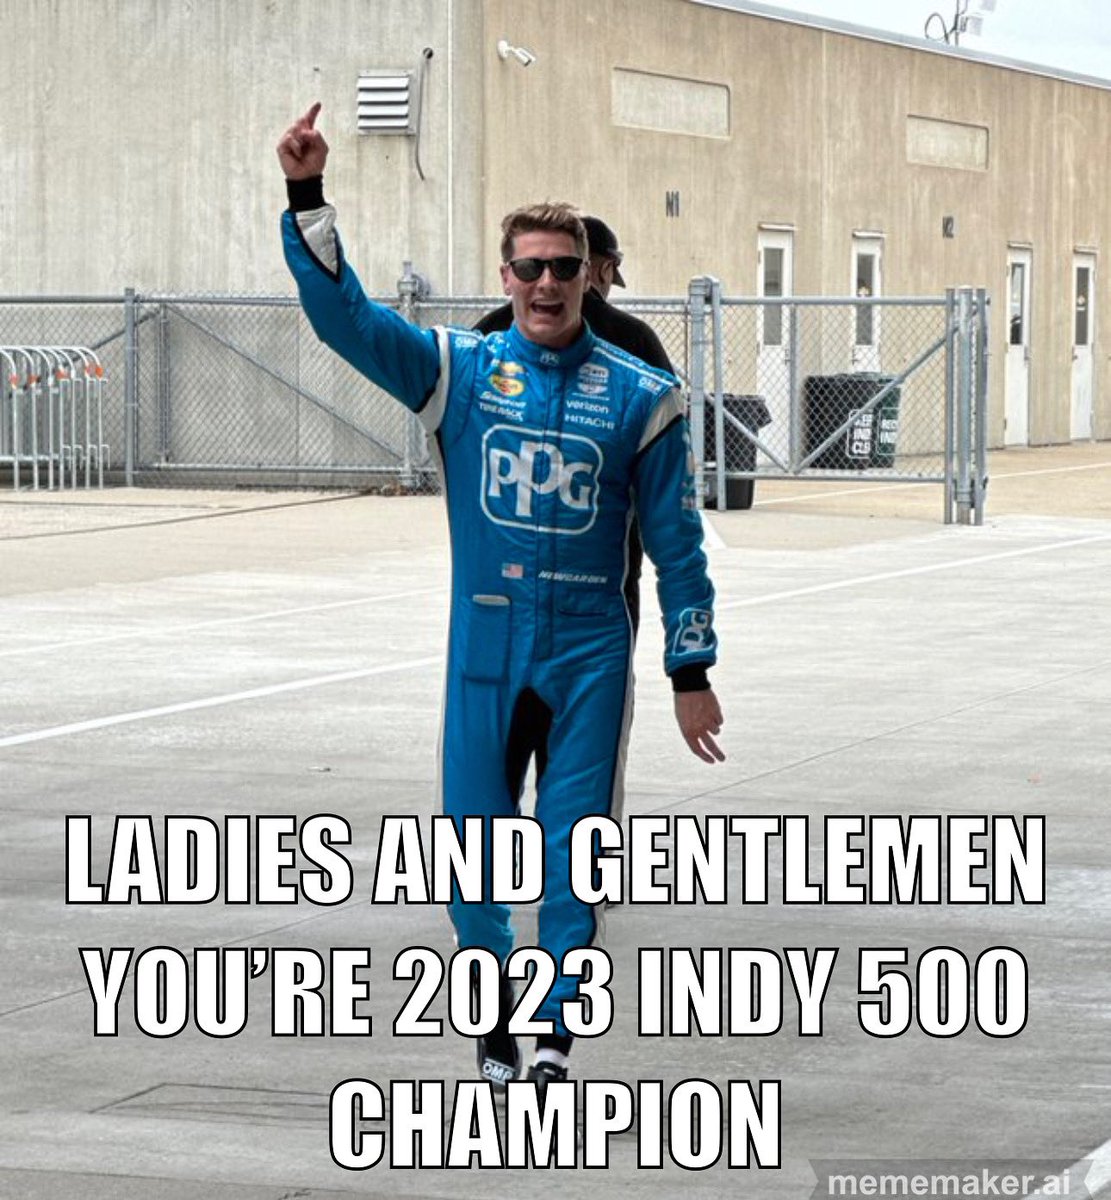 @josefnewgarden will his 2nd Indy 500 and he will win the 2024 @IndyCar championship.
#Indycar #JosefNewgarden #thegreatestofalltime #2023indy500champion #indy500winner #indy500champion #indianapolis500winner #Champion #penskeracing #BestInTheWorld #TeamPenske